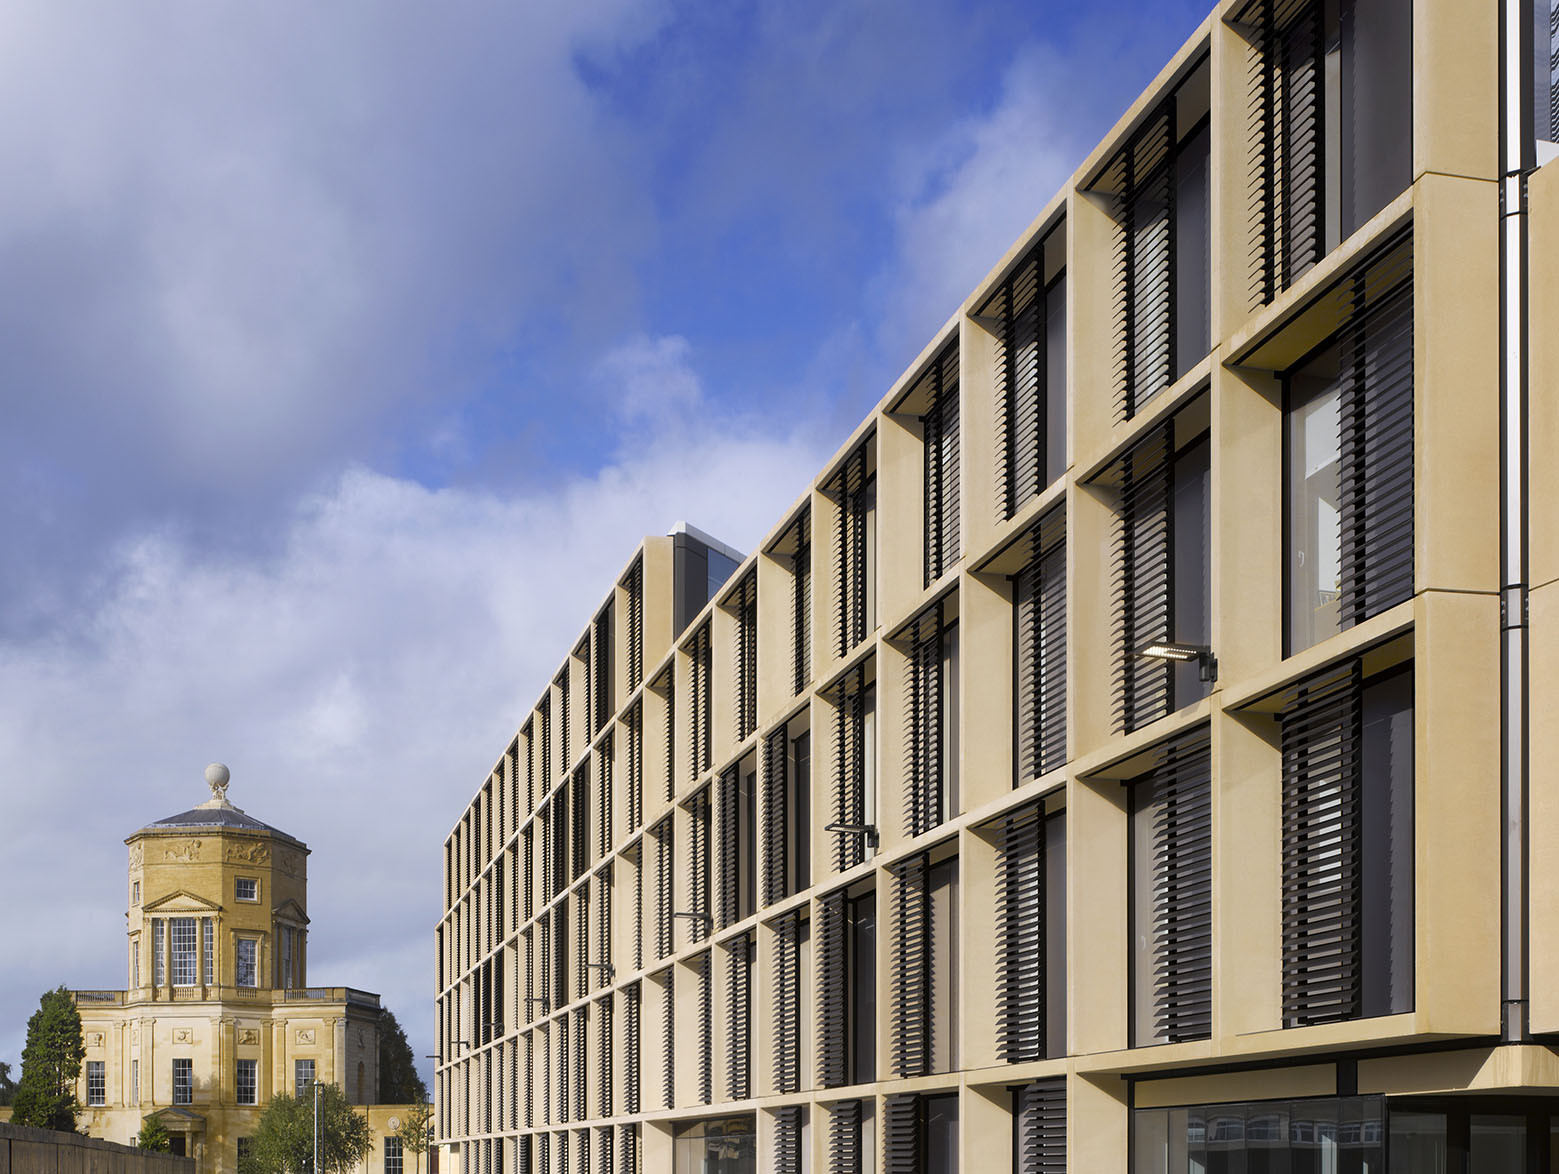 University of Oxford Mathematical Institute  Rafael Viñoly Architects-7